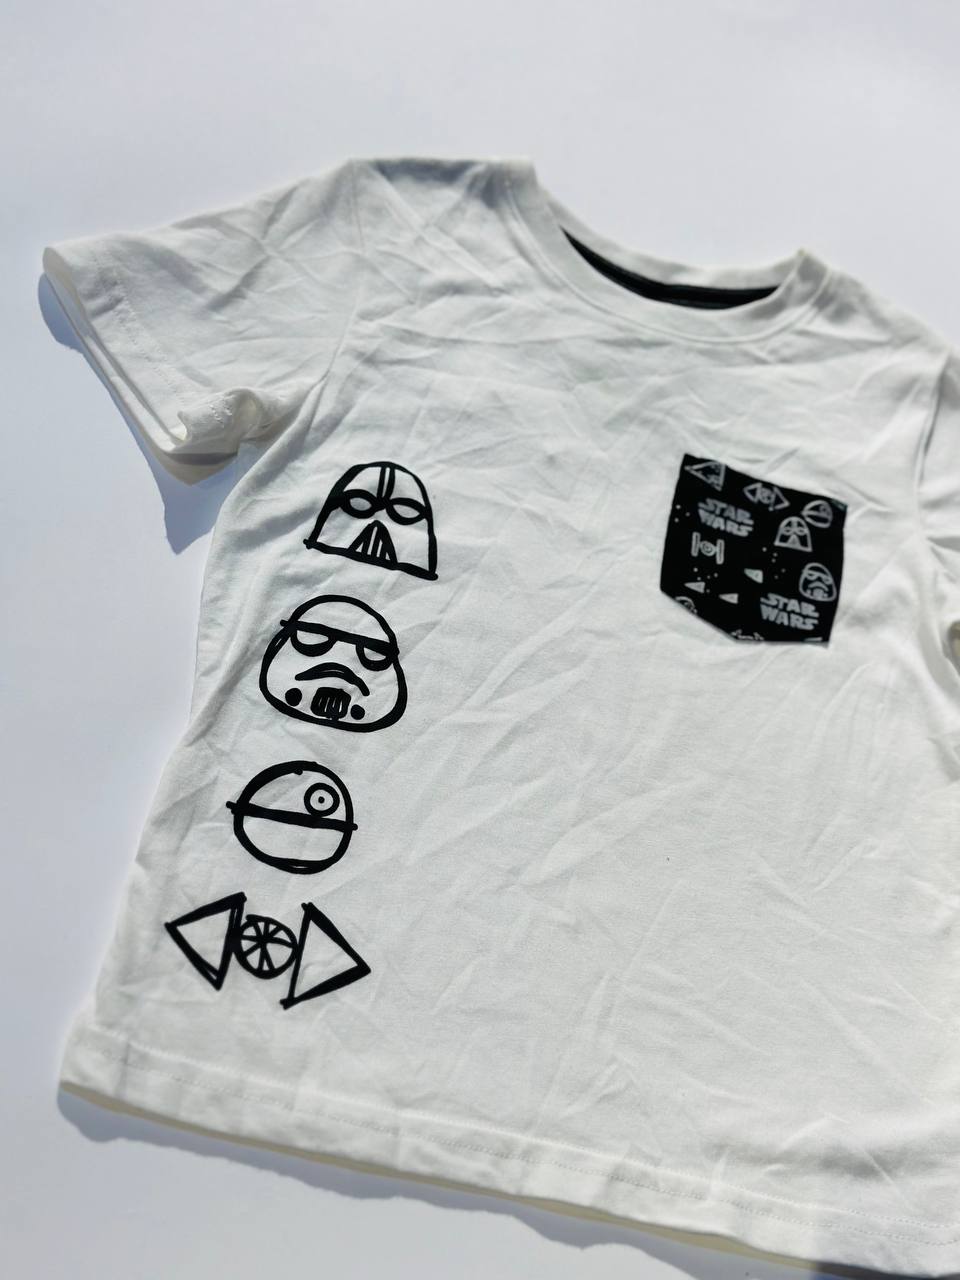 Star Wars kids shirt